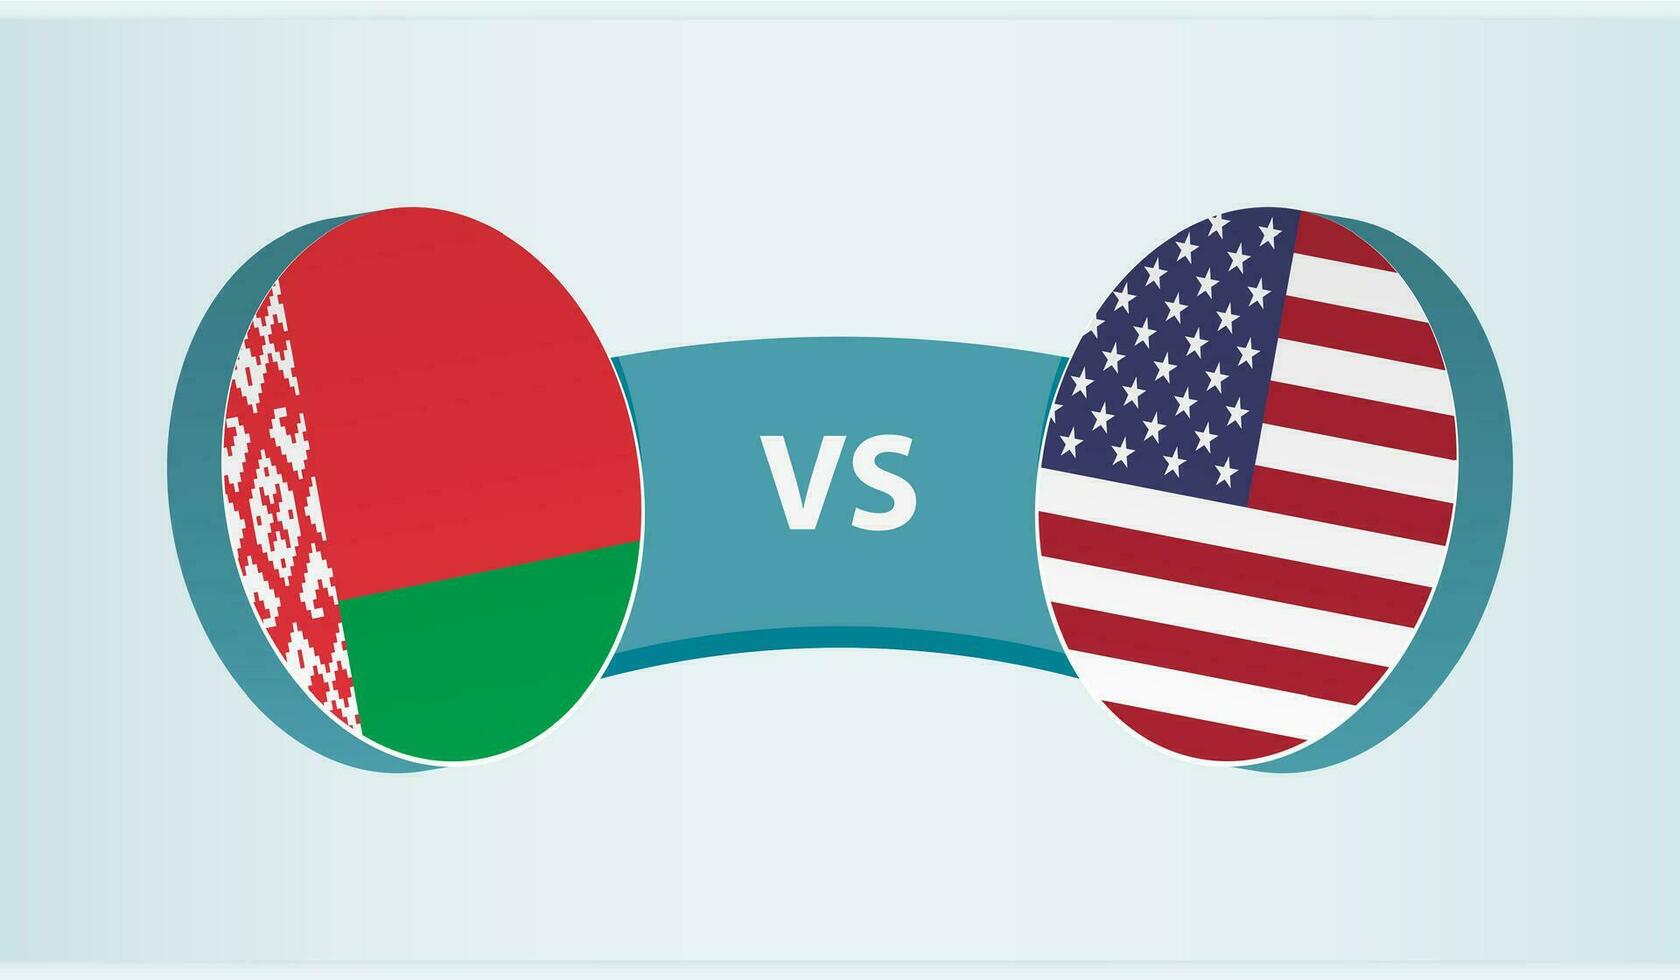 Belarus versus USA, team sports competition concept. vector